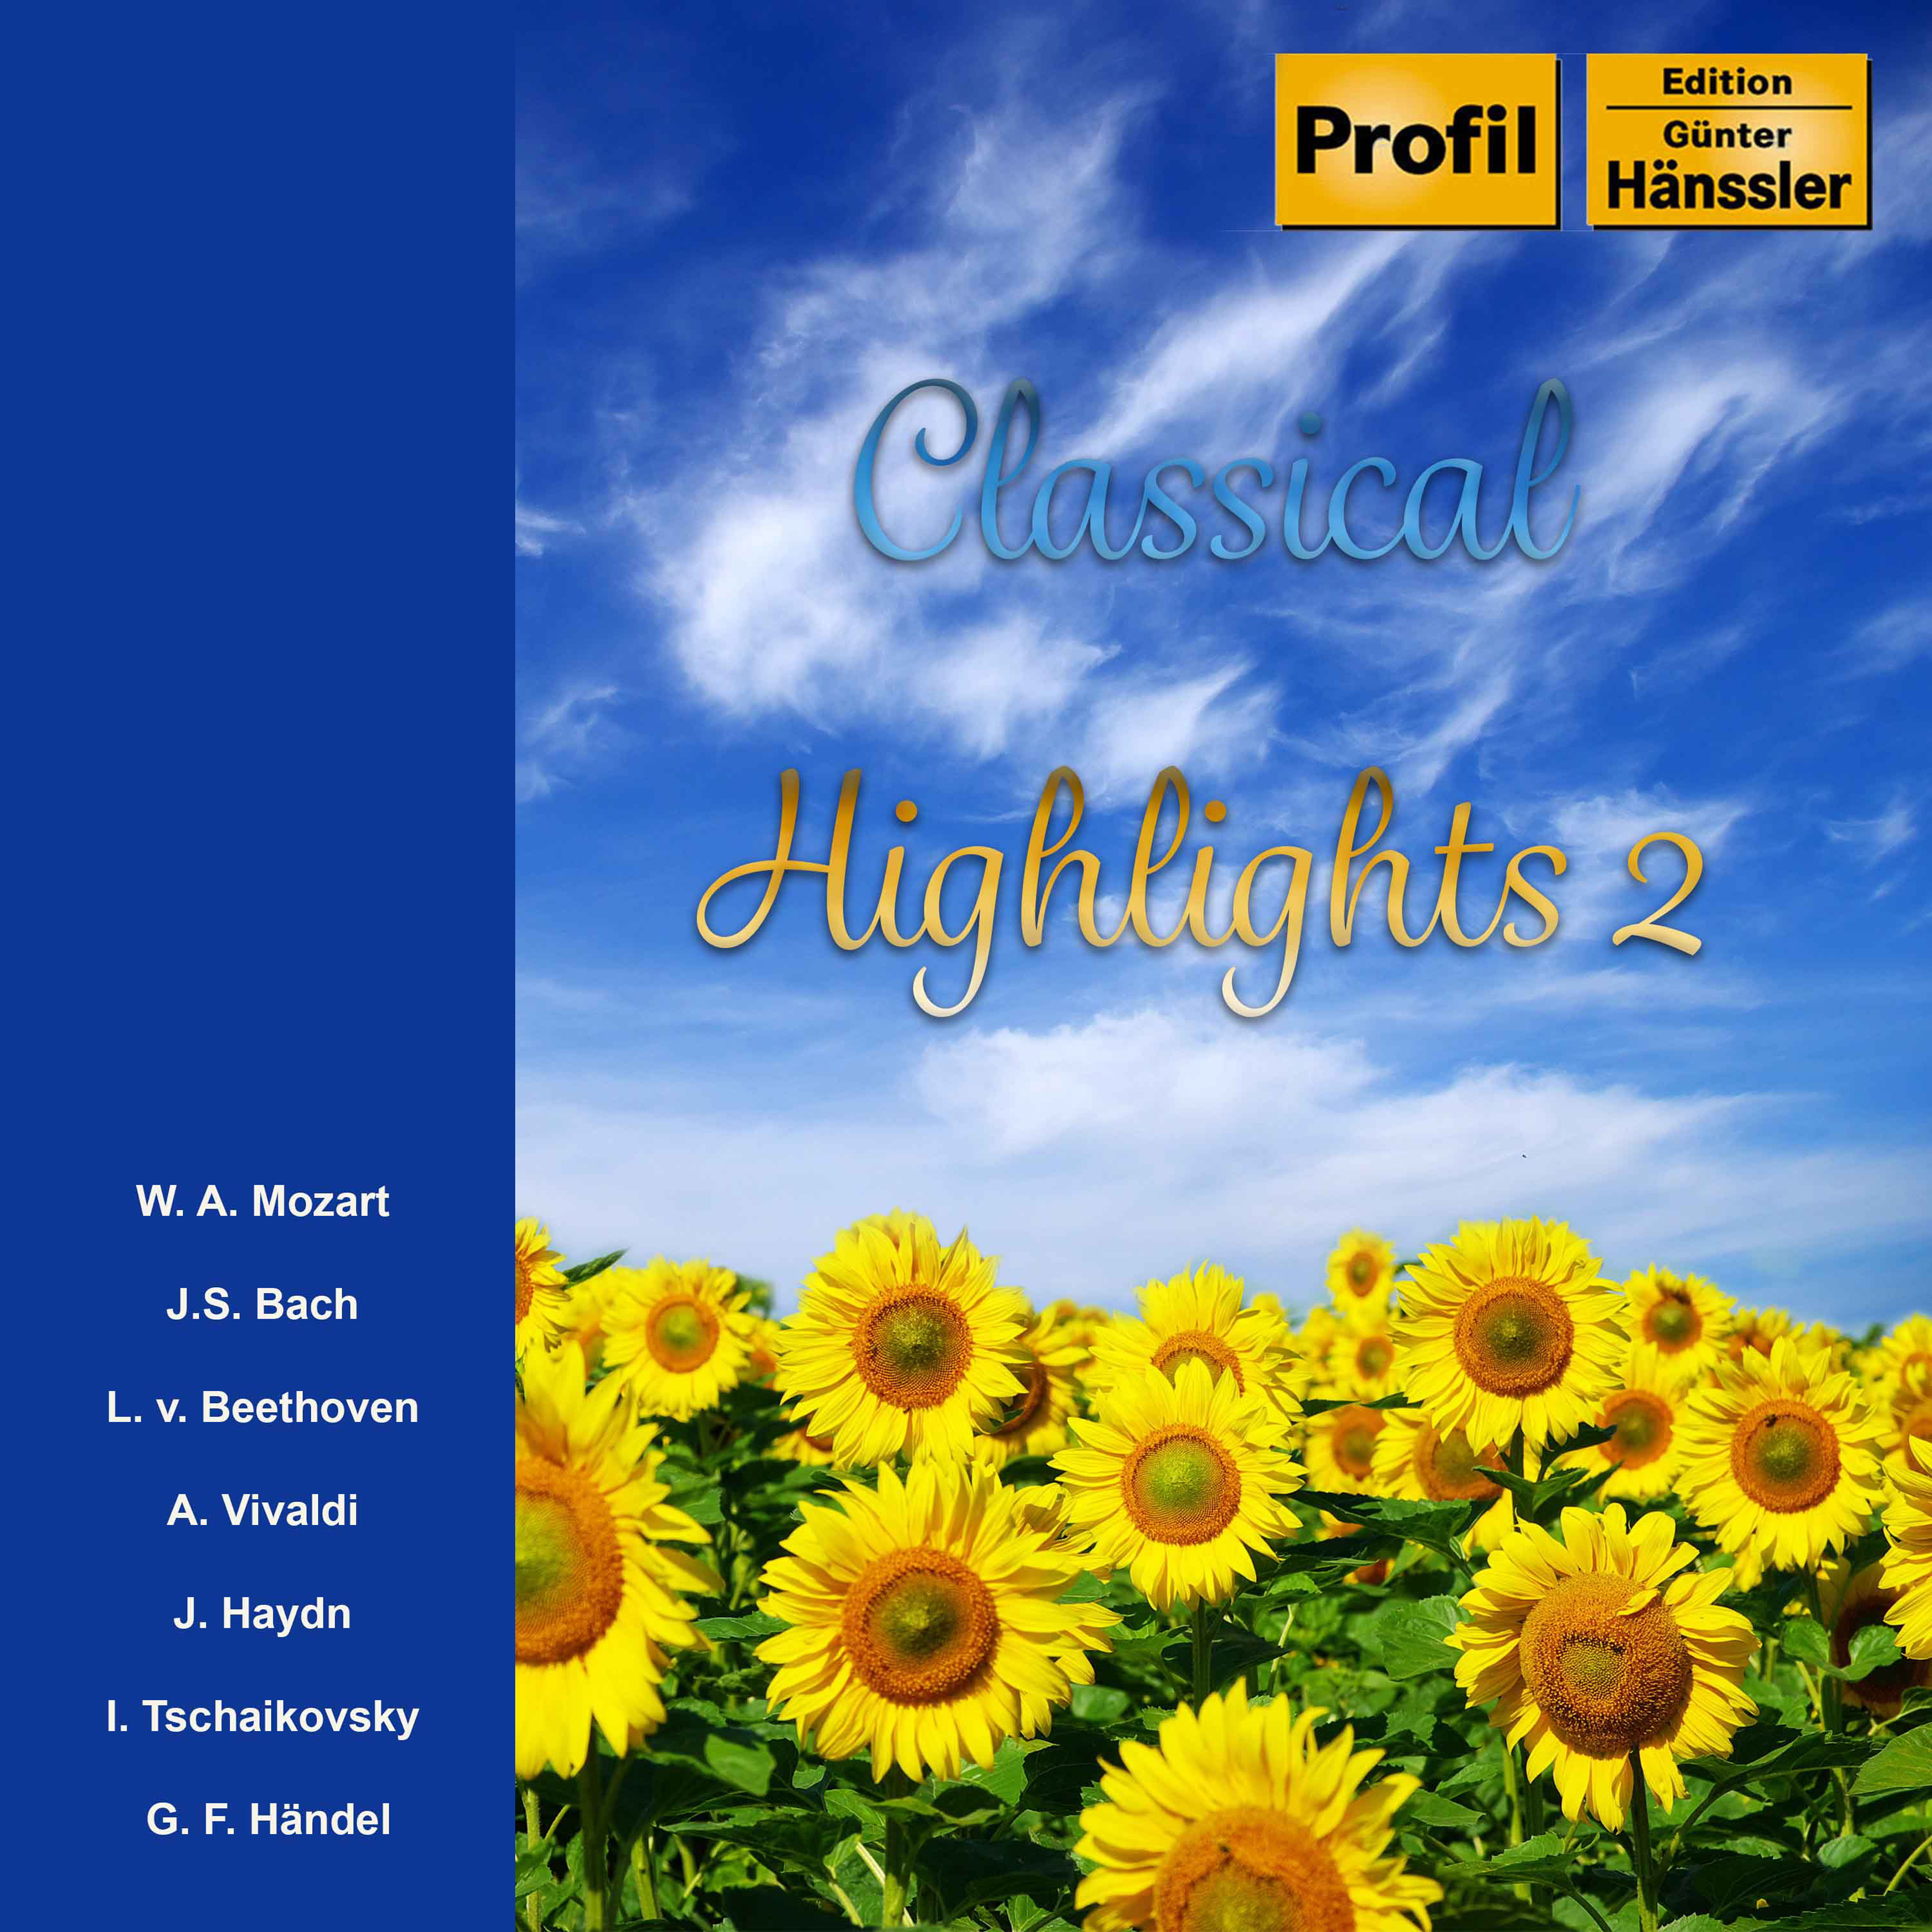 Piano Sonata No. 14 in C-Sharp Minor, Op. 27 No. 2 "Moonlight": I. Adagio sostenuto